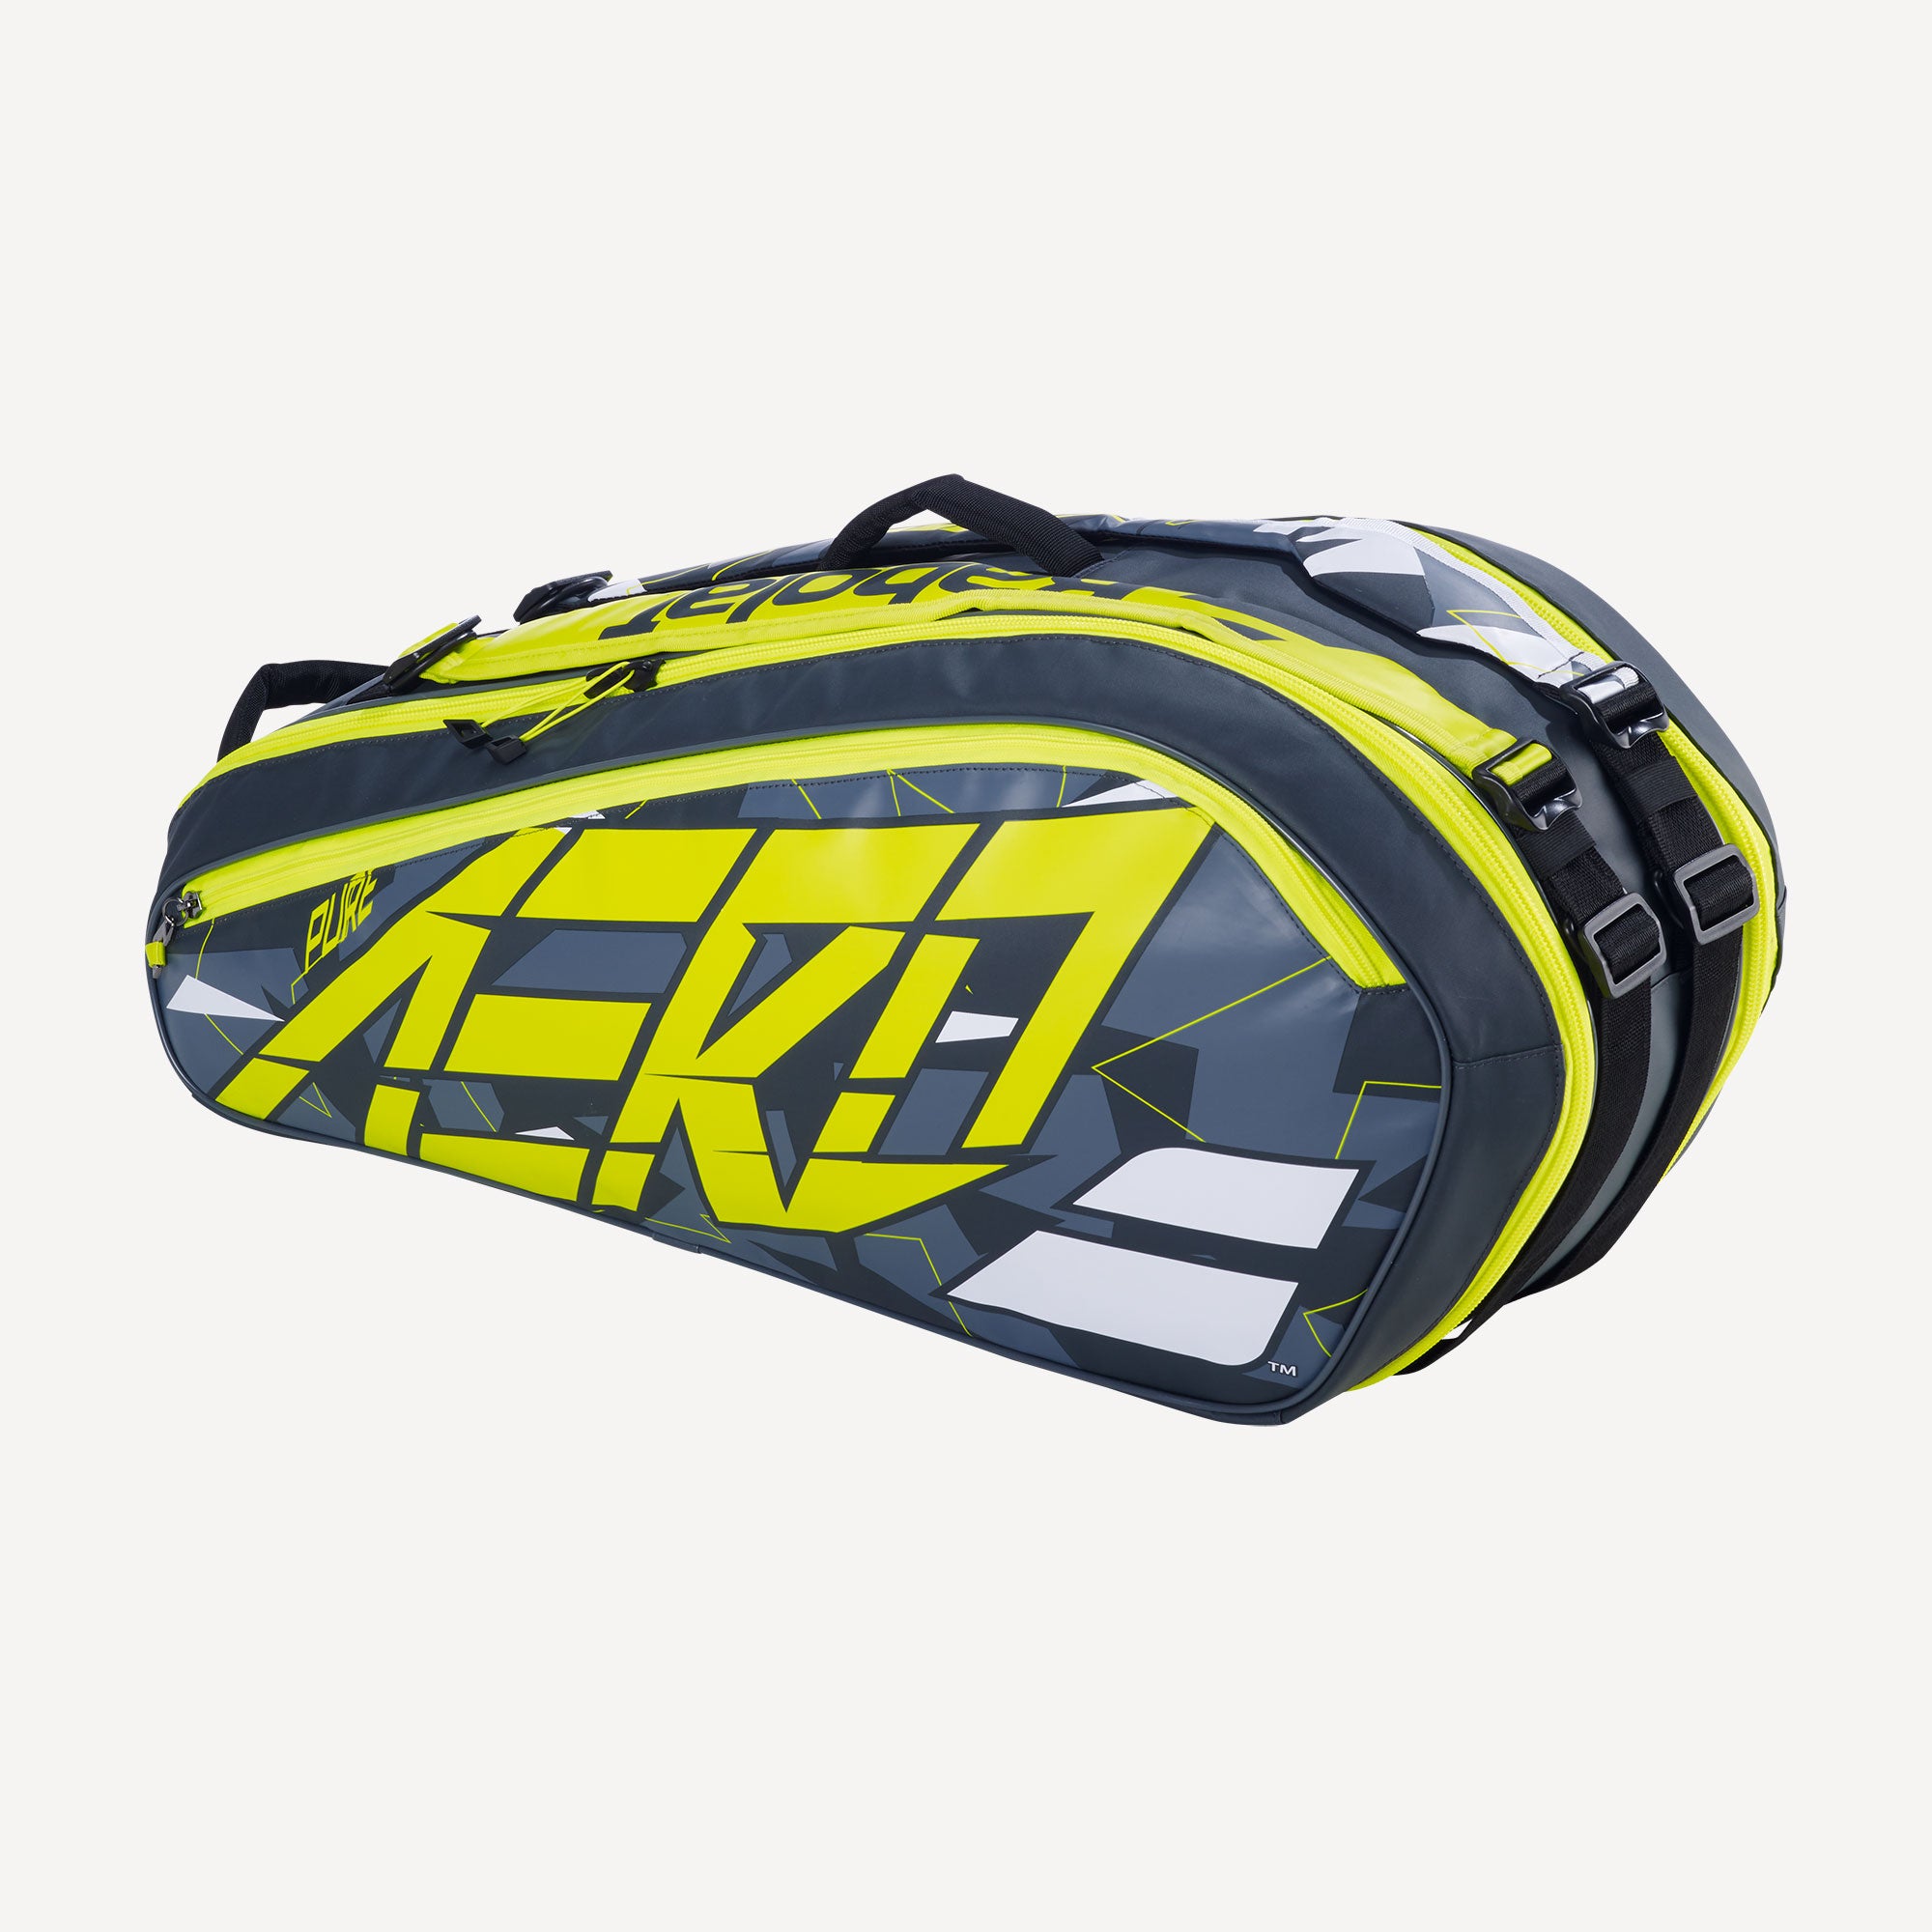 Babolat Pure Aero RH X6 Tennis Bag Black (2)